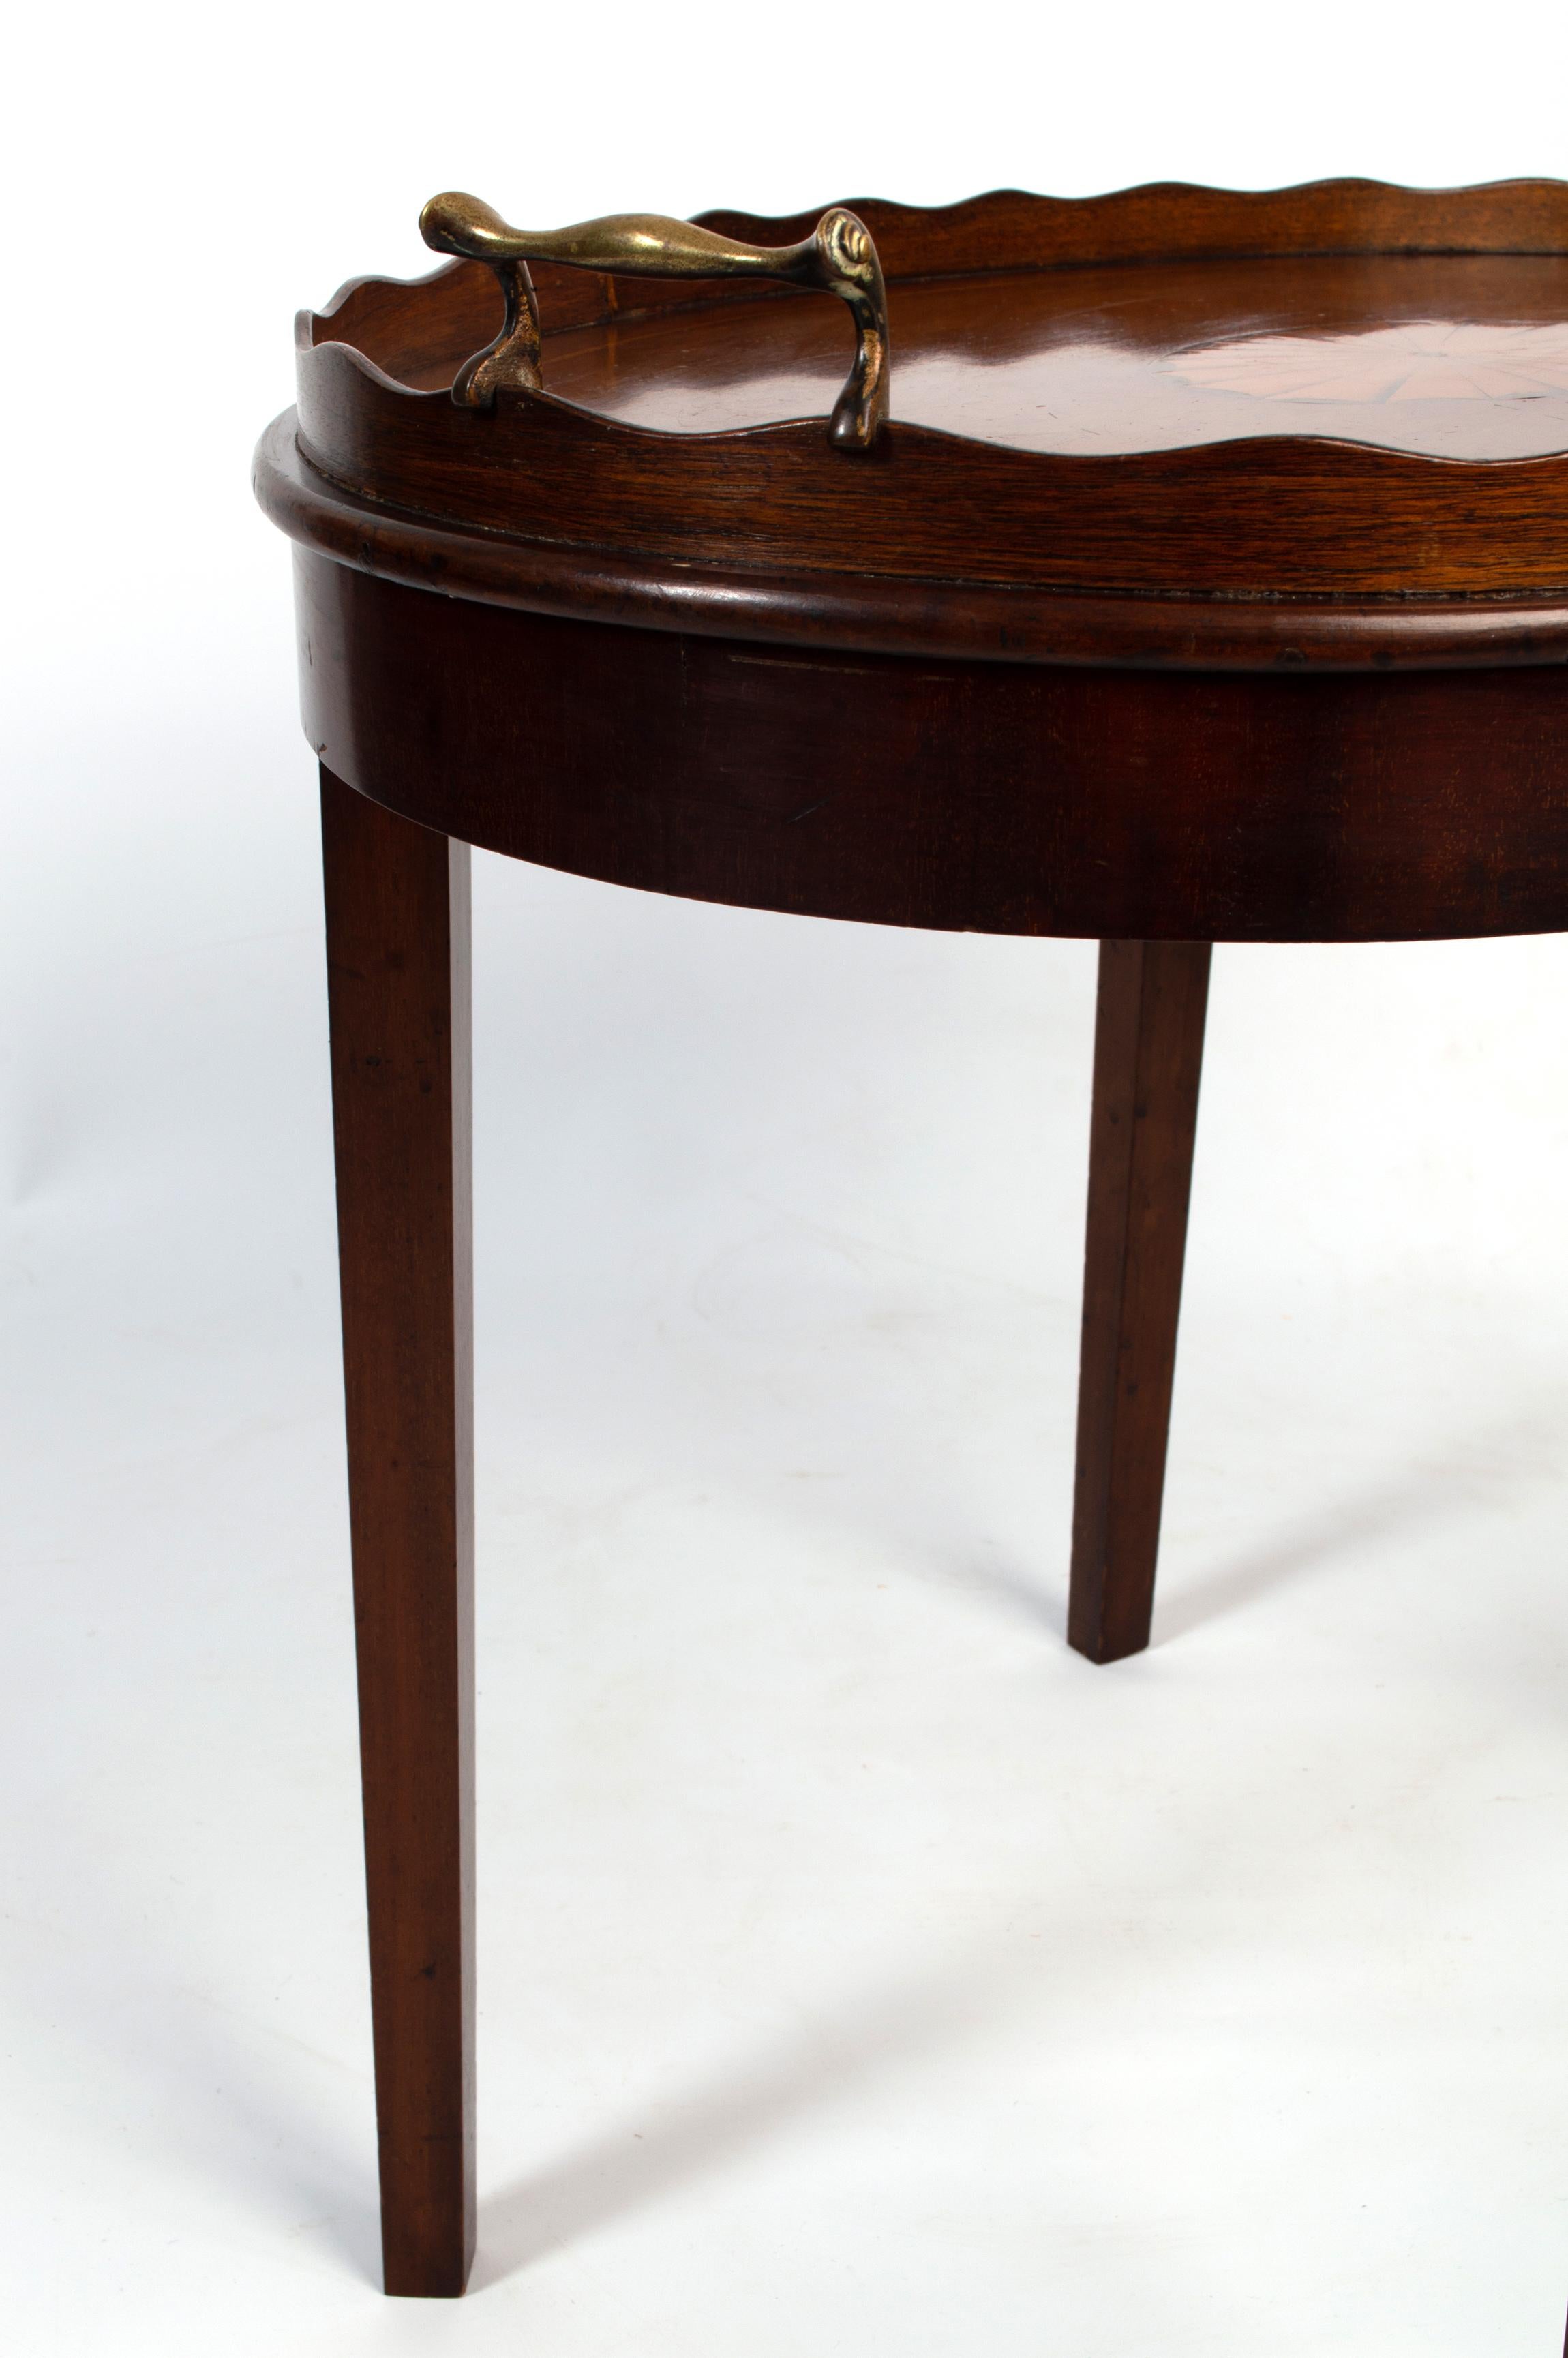 Antique English 19th Century Sheraton Revival Mahogany Tray Table For Sale 1